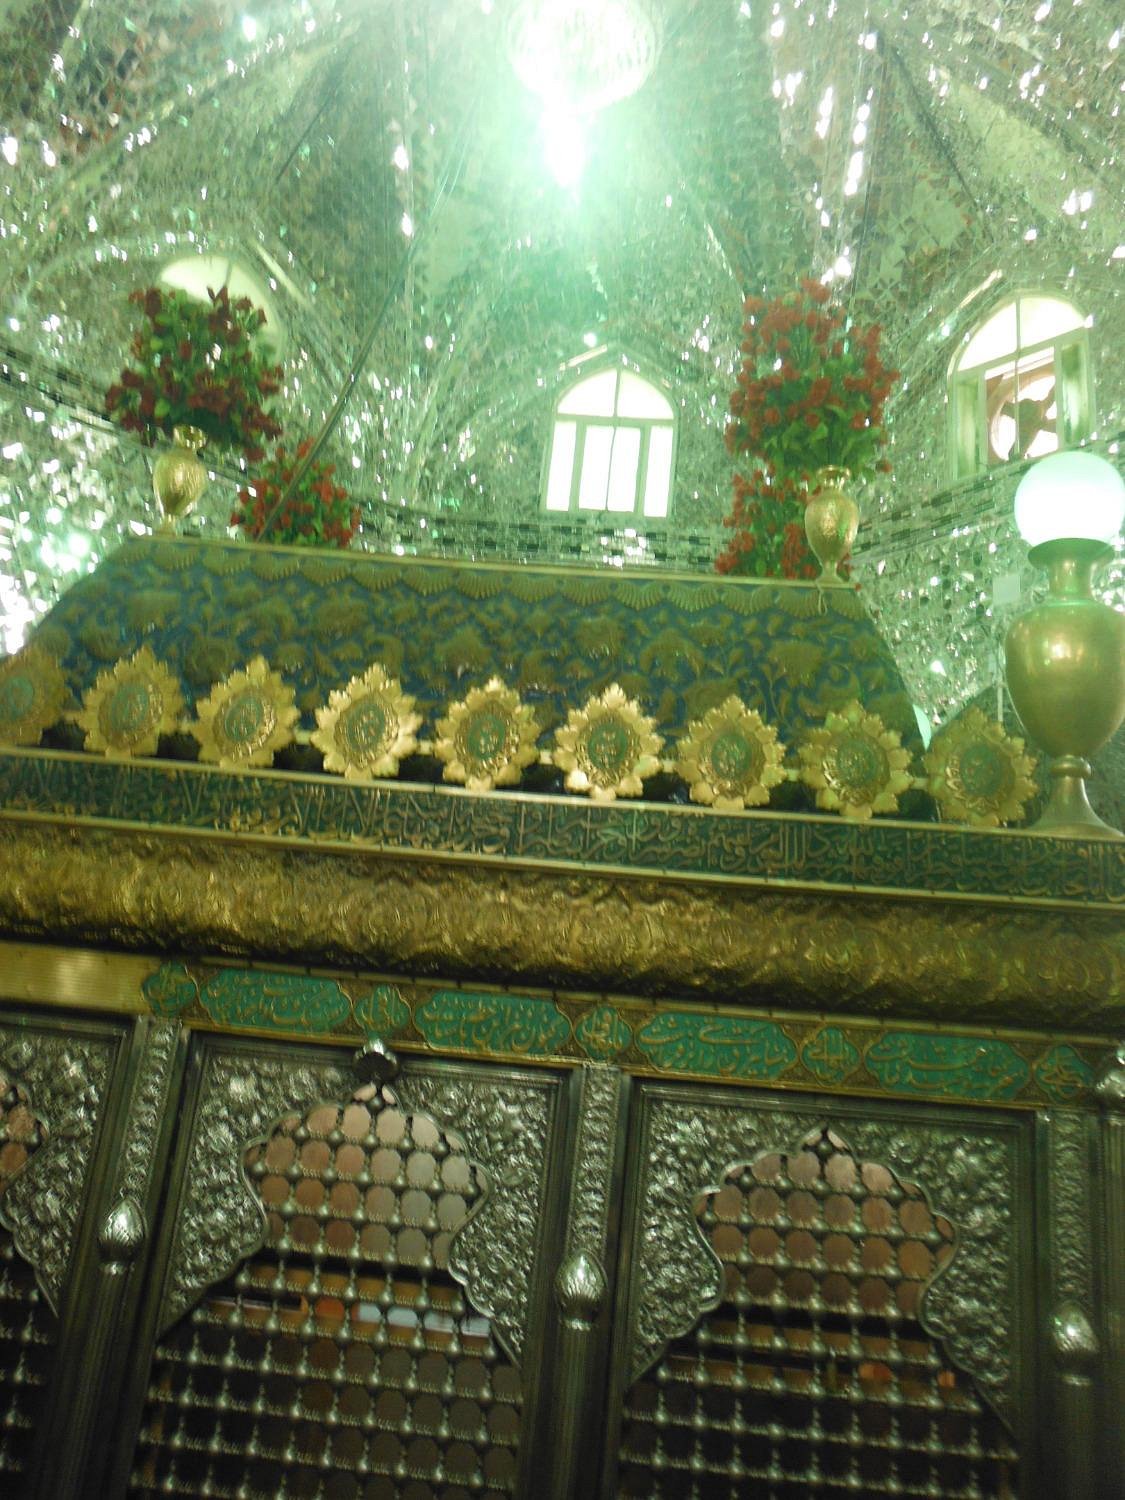 Tomb of Daniel, Shushtar